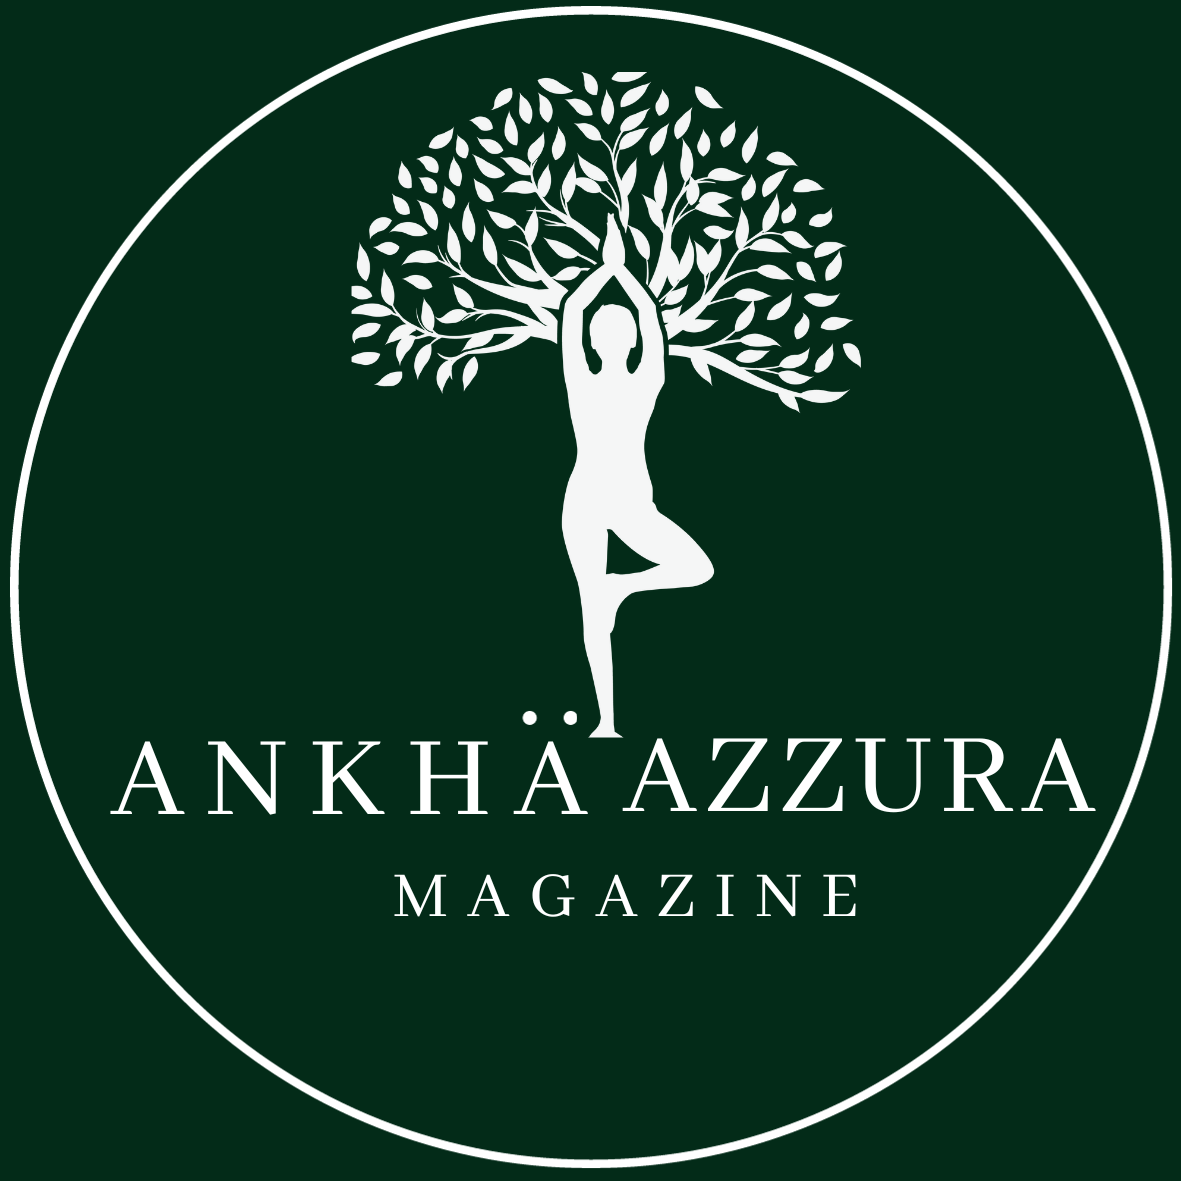 Ankha Azzura Stories